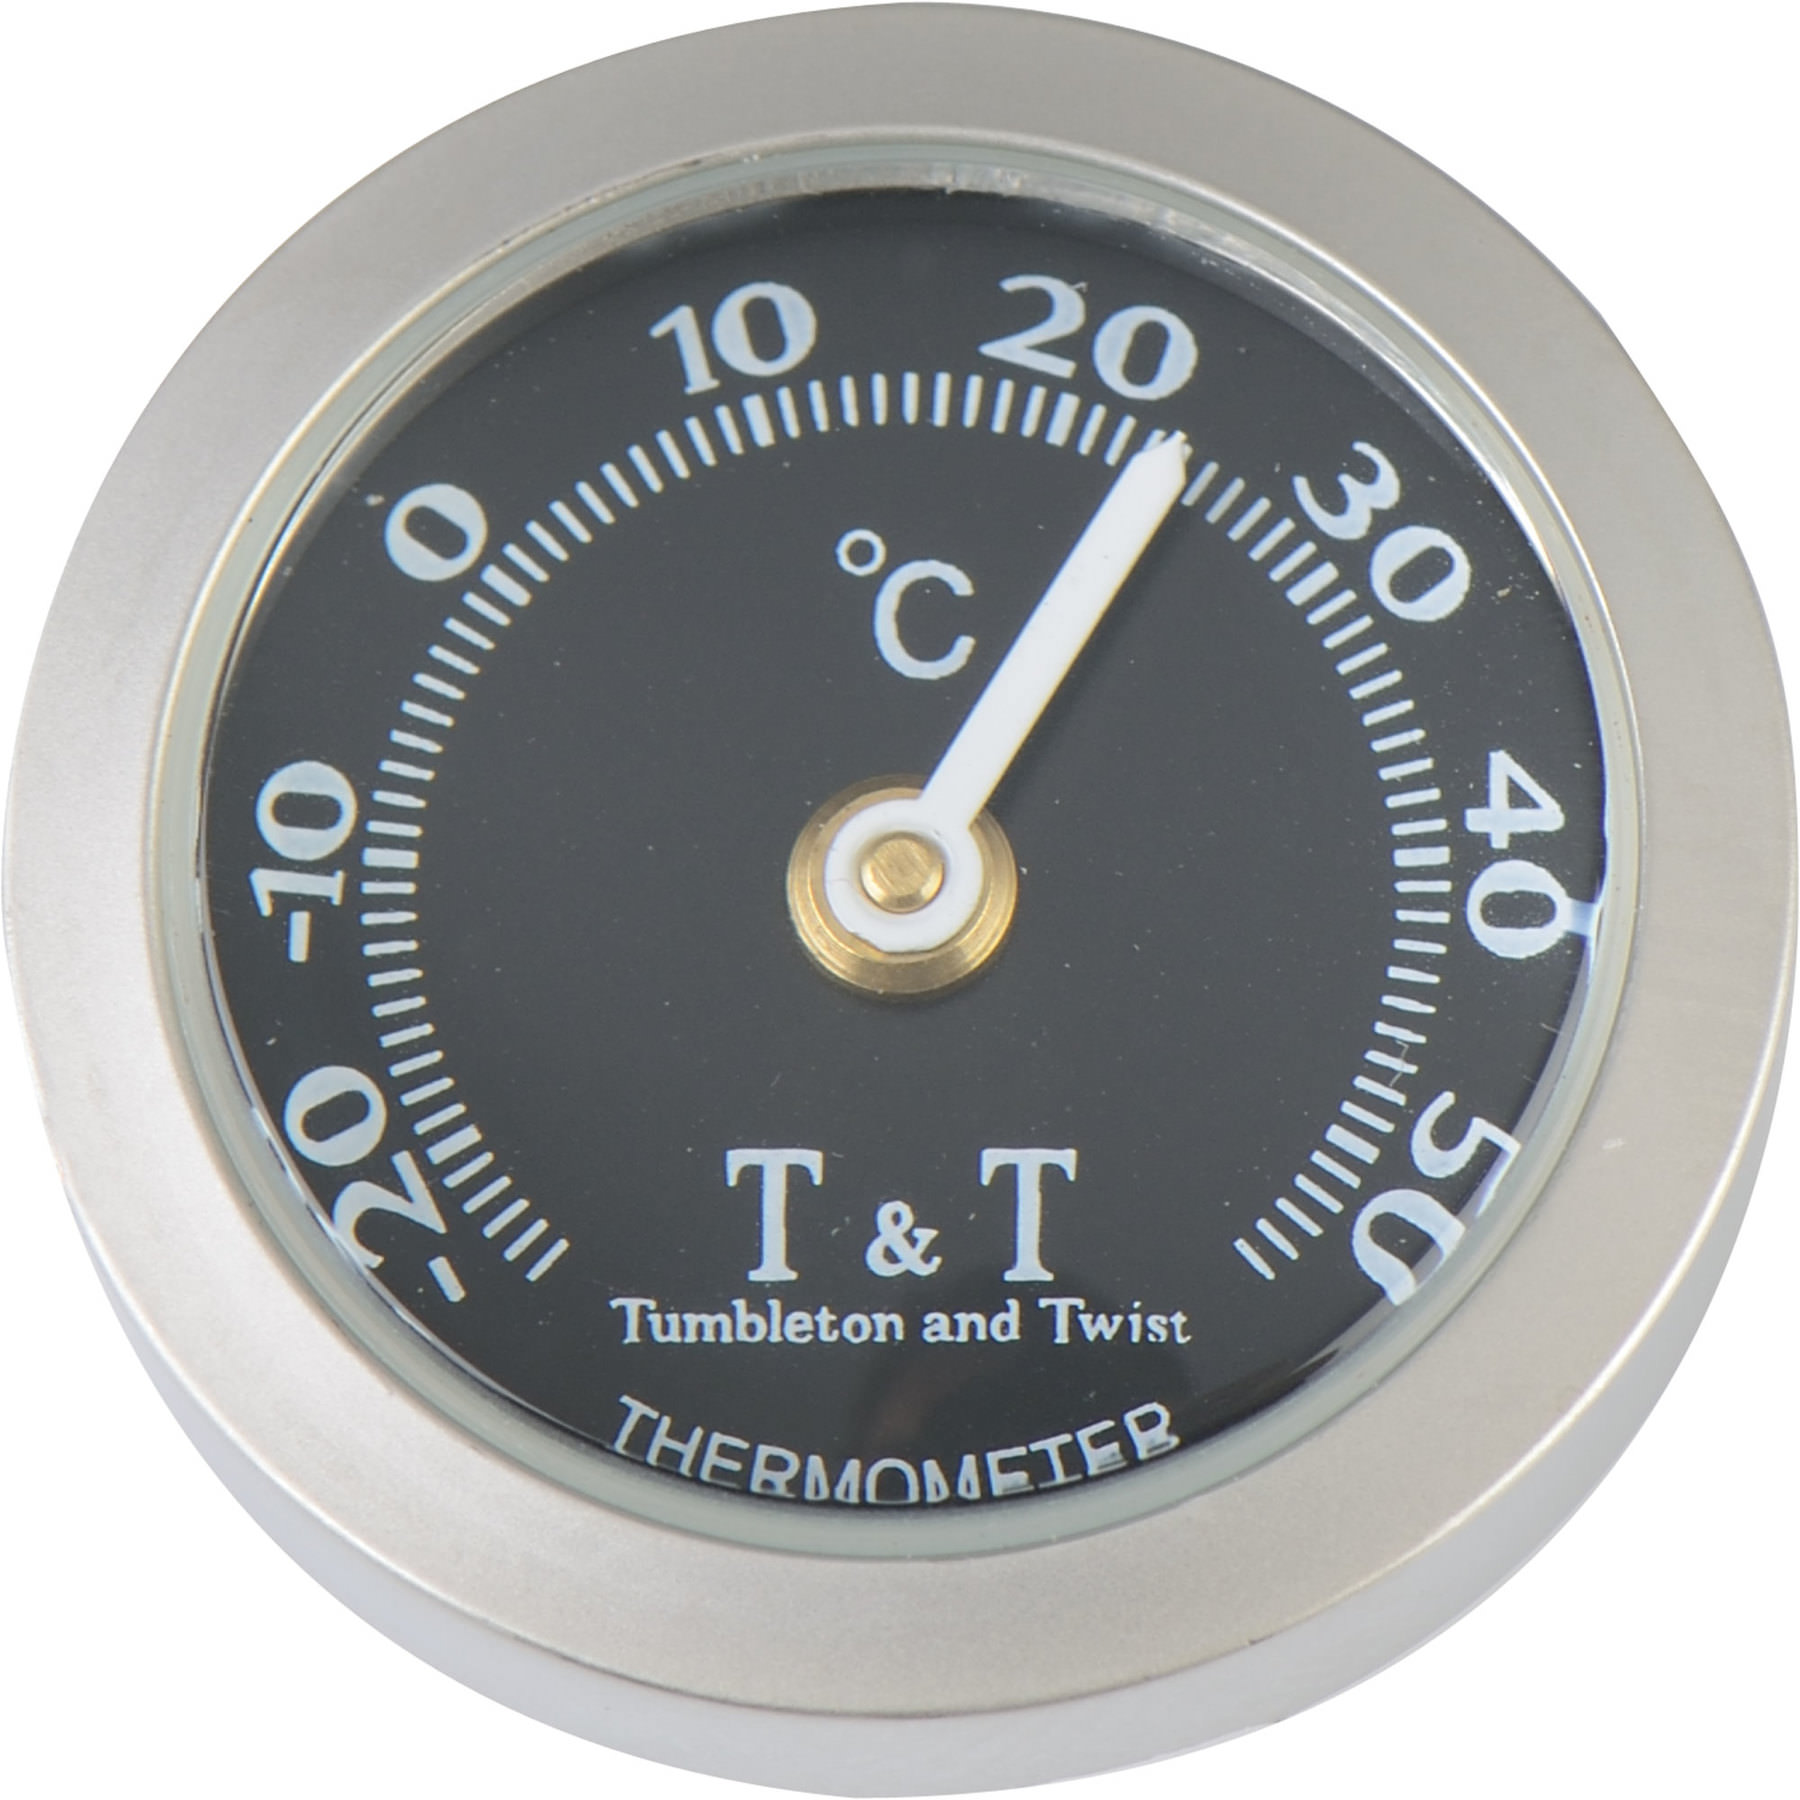 stikstof aardolie geweten Tumbleton and Twist T&T analoge thermometer verschillende kleuren